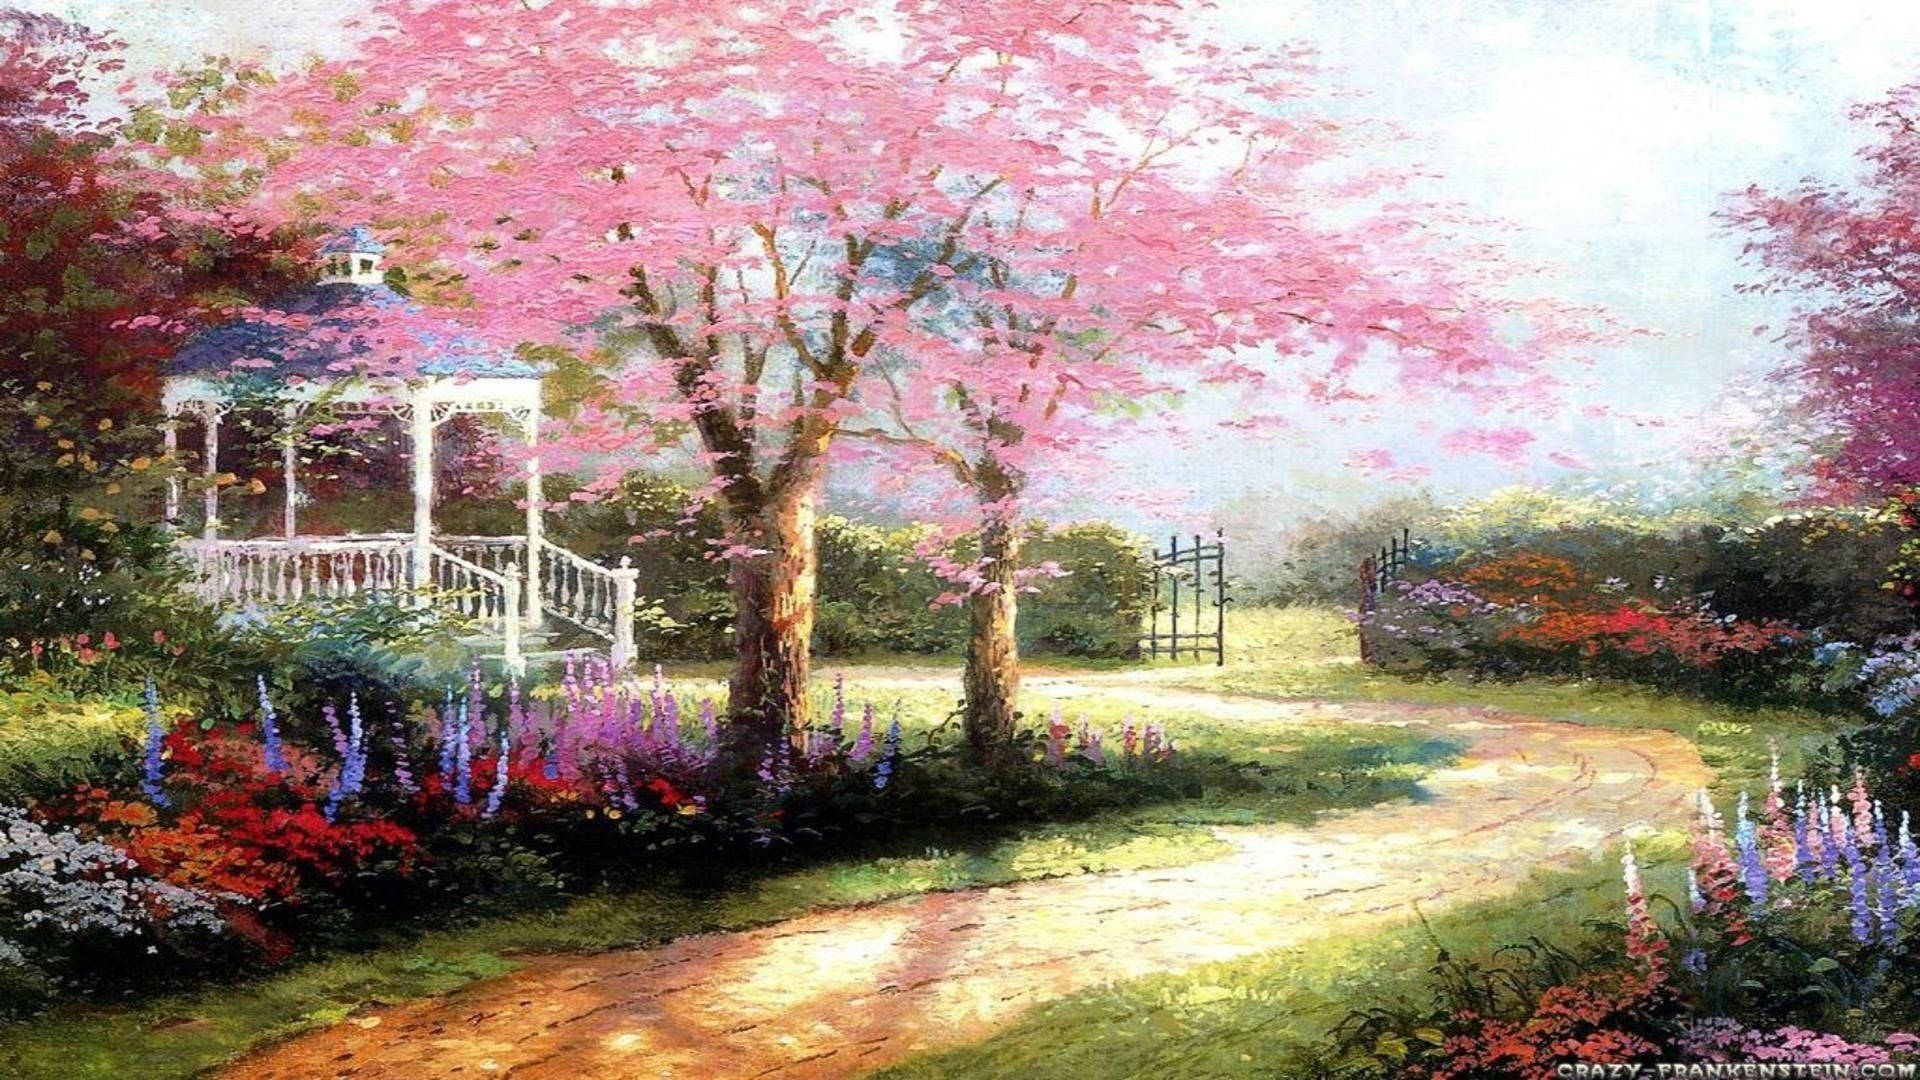 A Peaceful Tree Painting in Spring Desktop Wallpaper